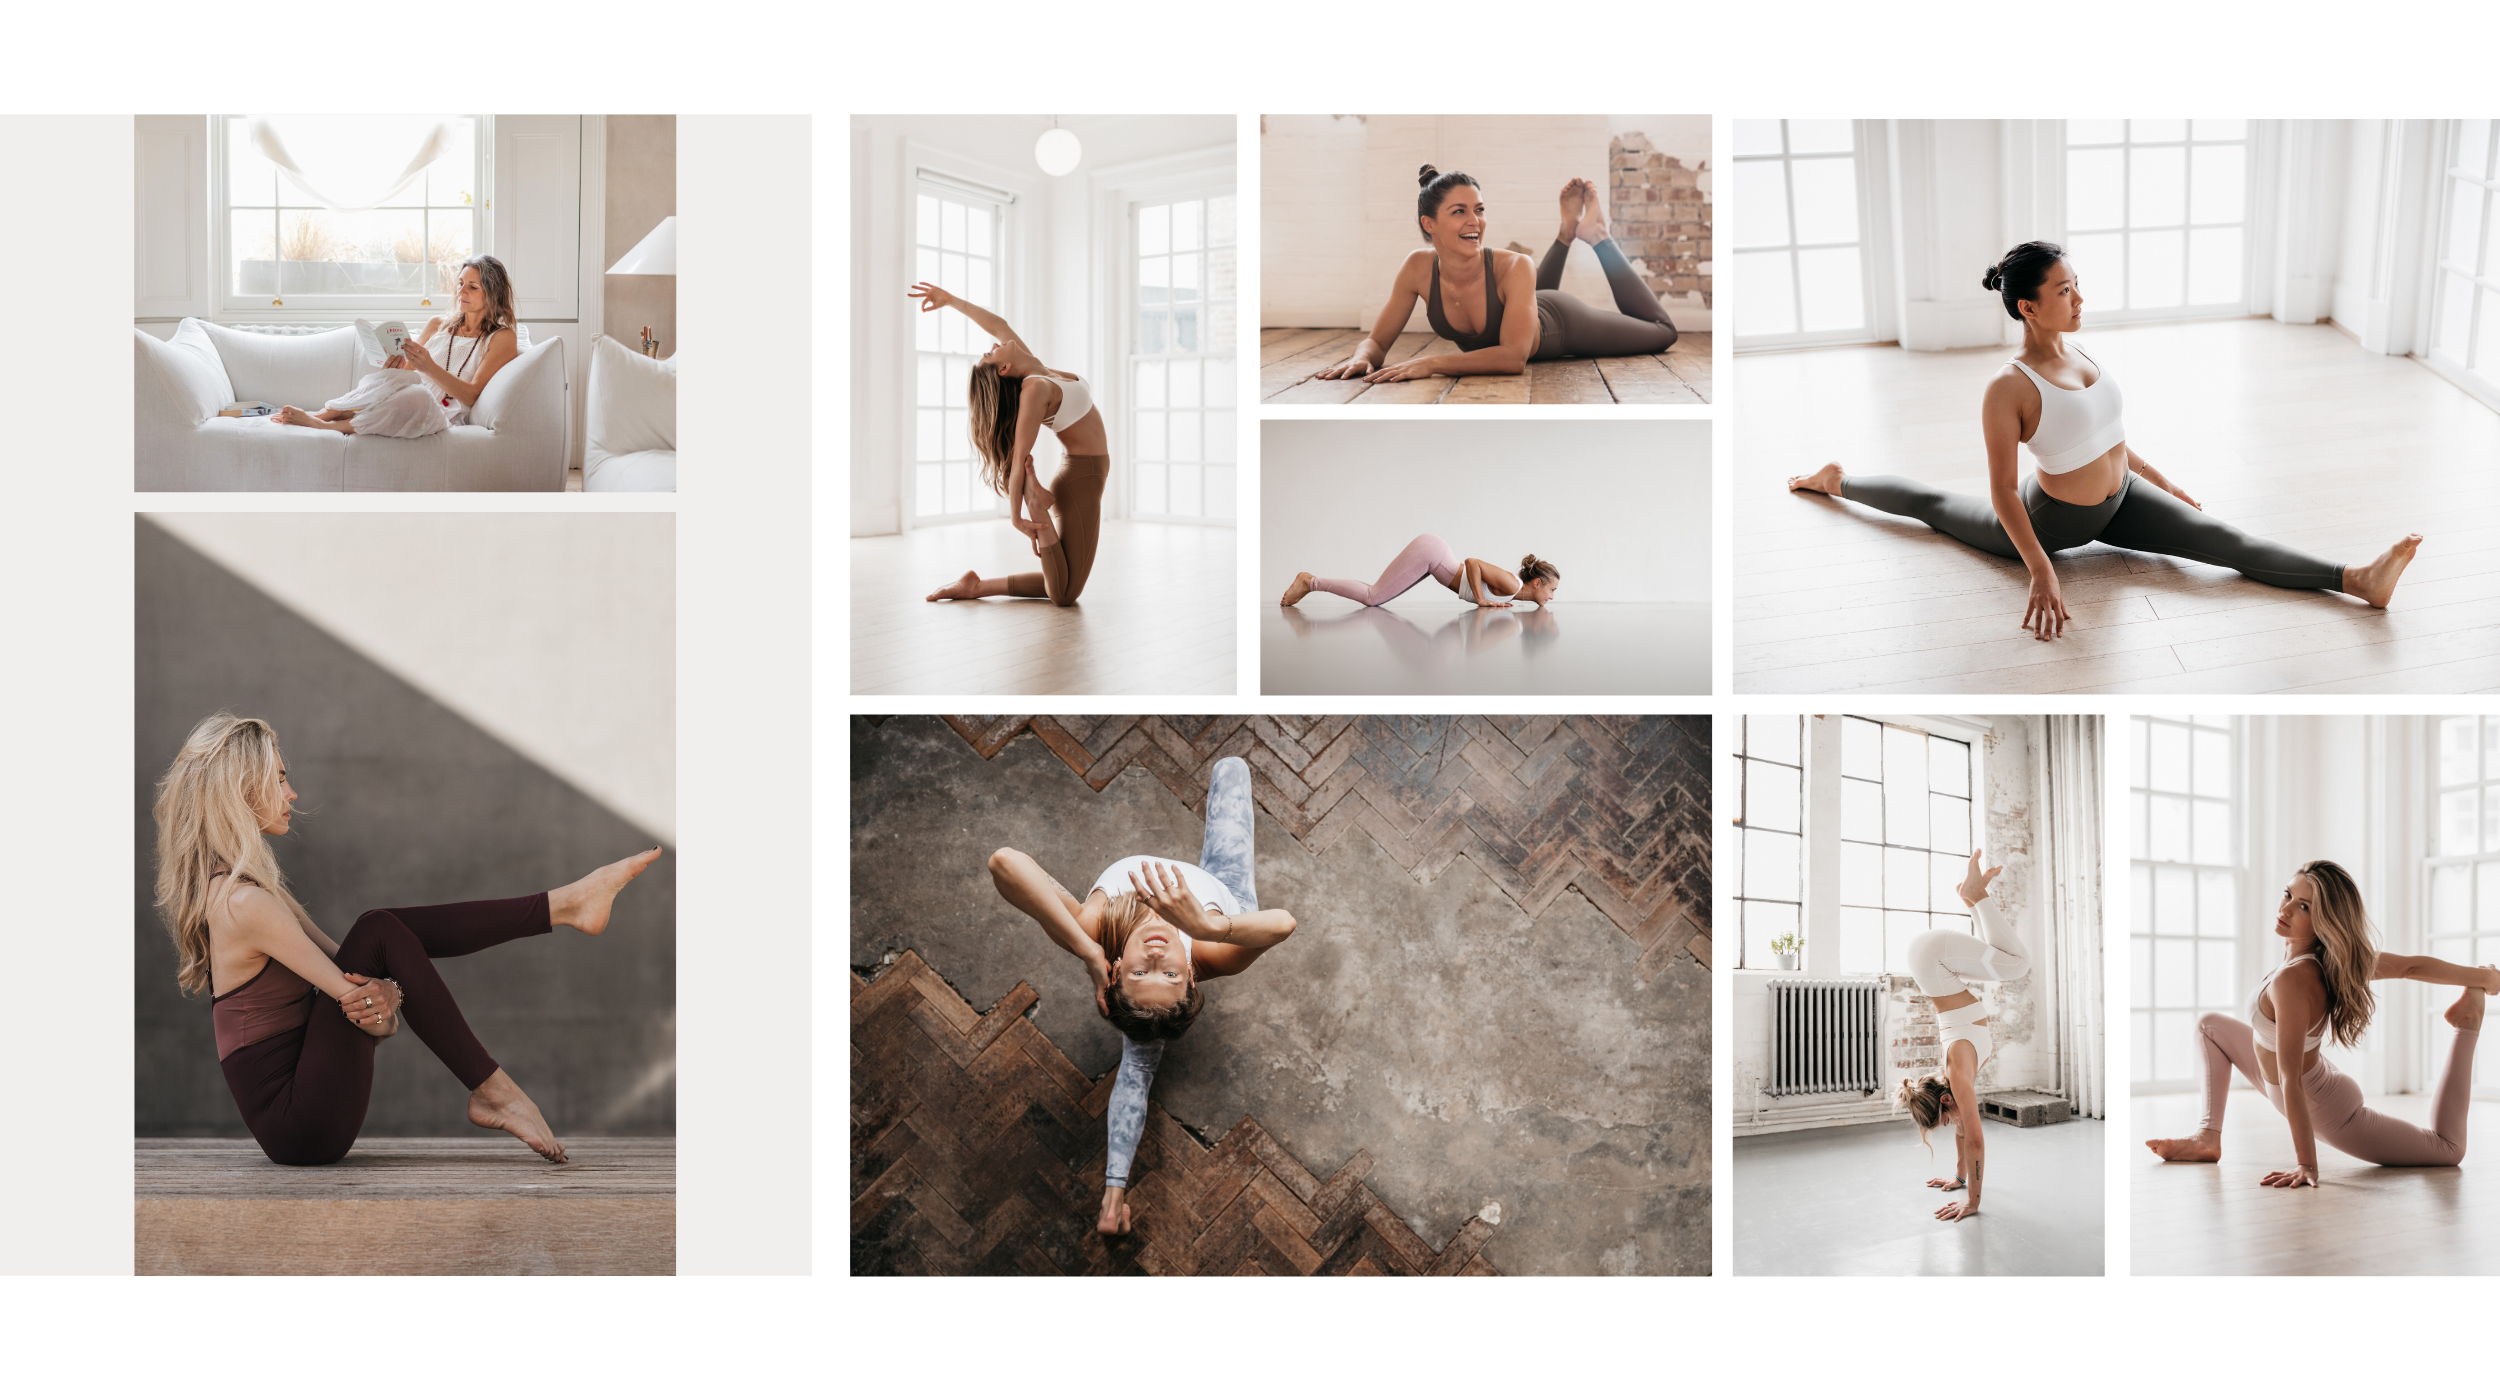 London Yoga Photography, London Photography, Yoga photographer, Wellness, Lifestyle, Branding